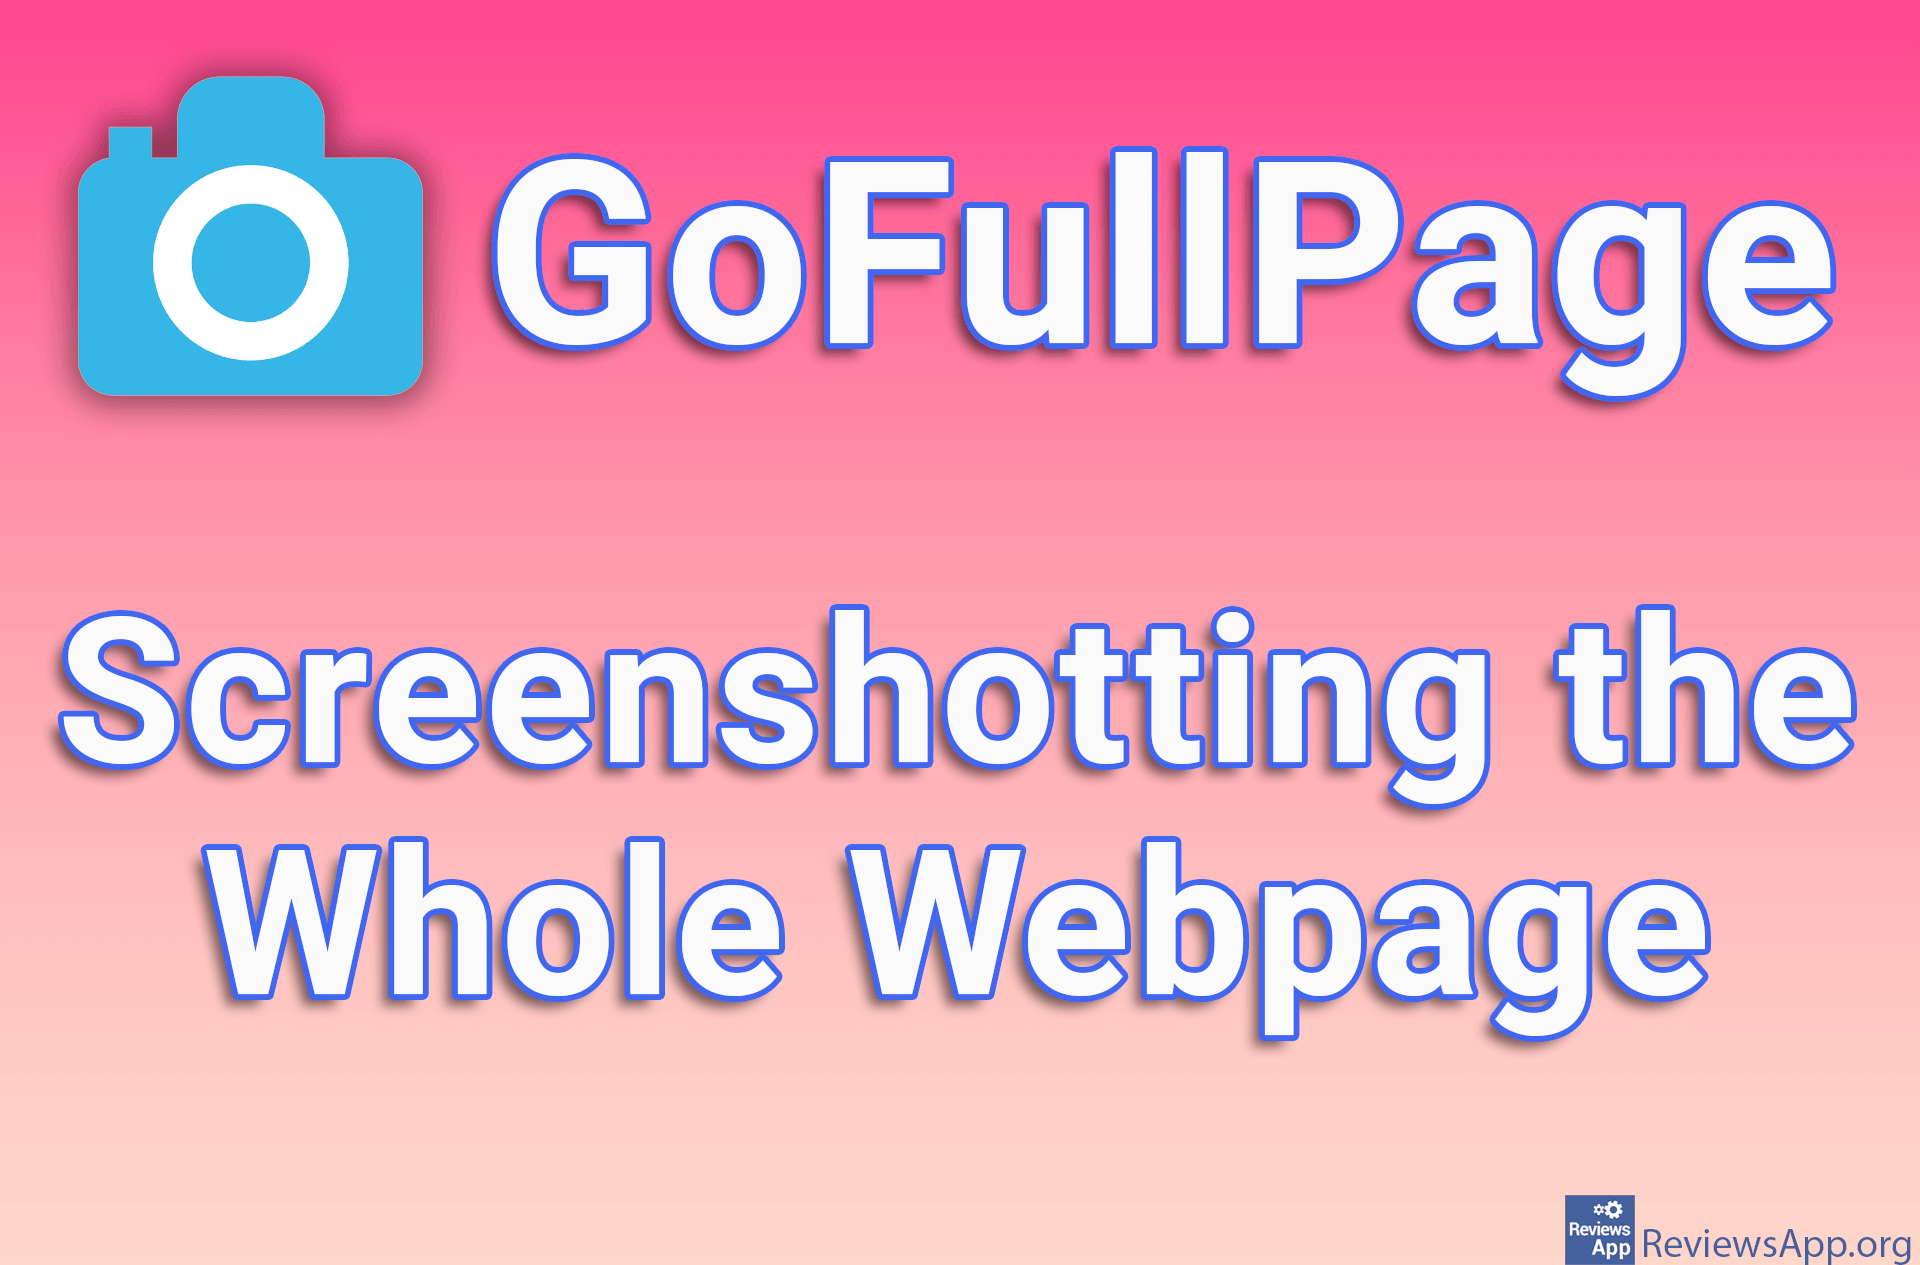 GoFullPage – Screenshotting the Whole Webpage